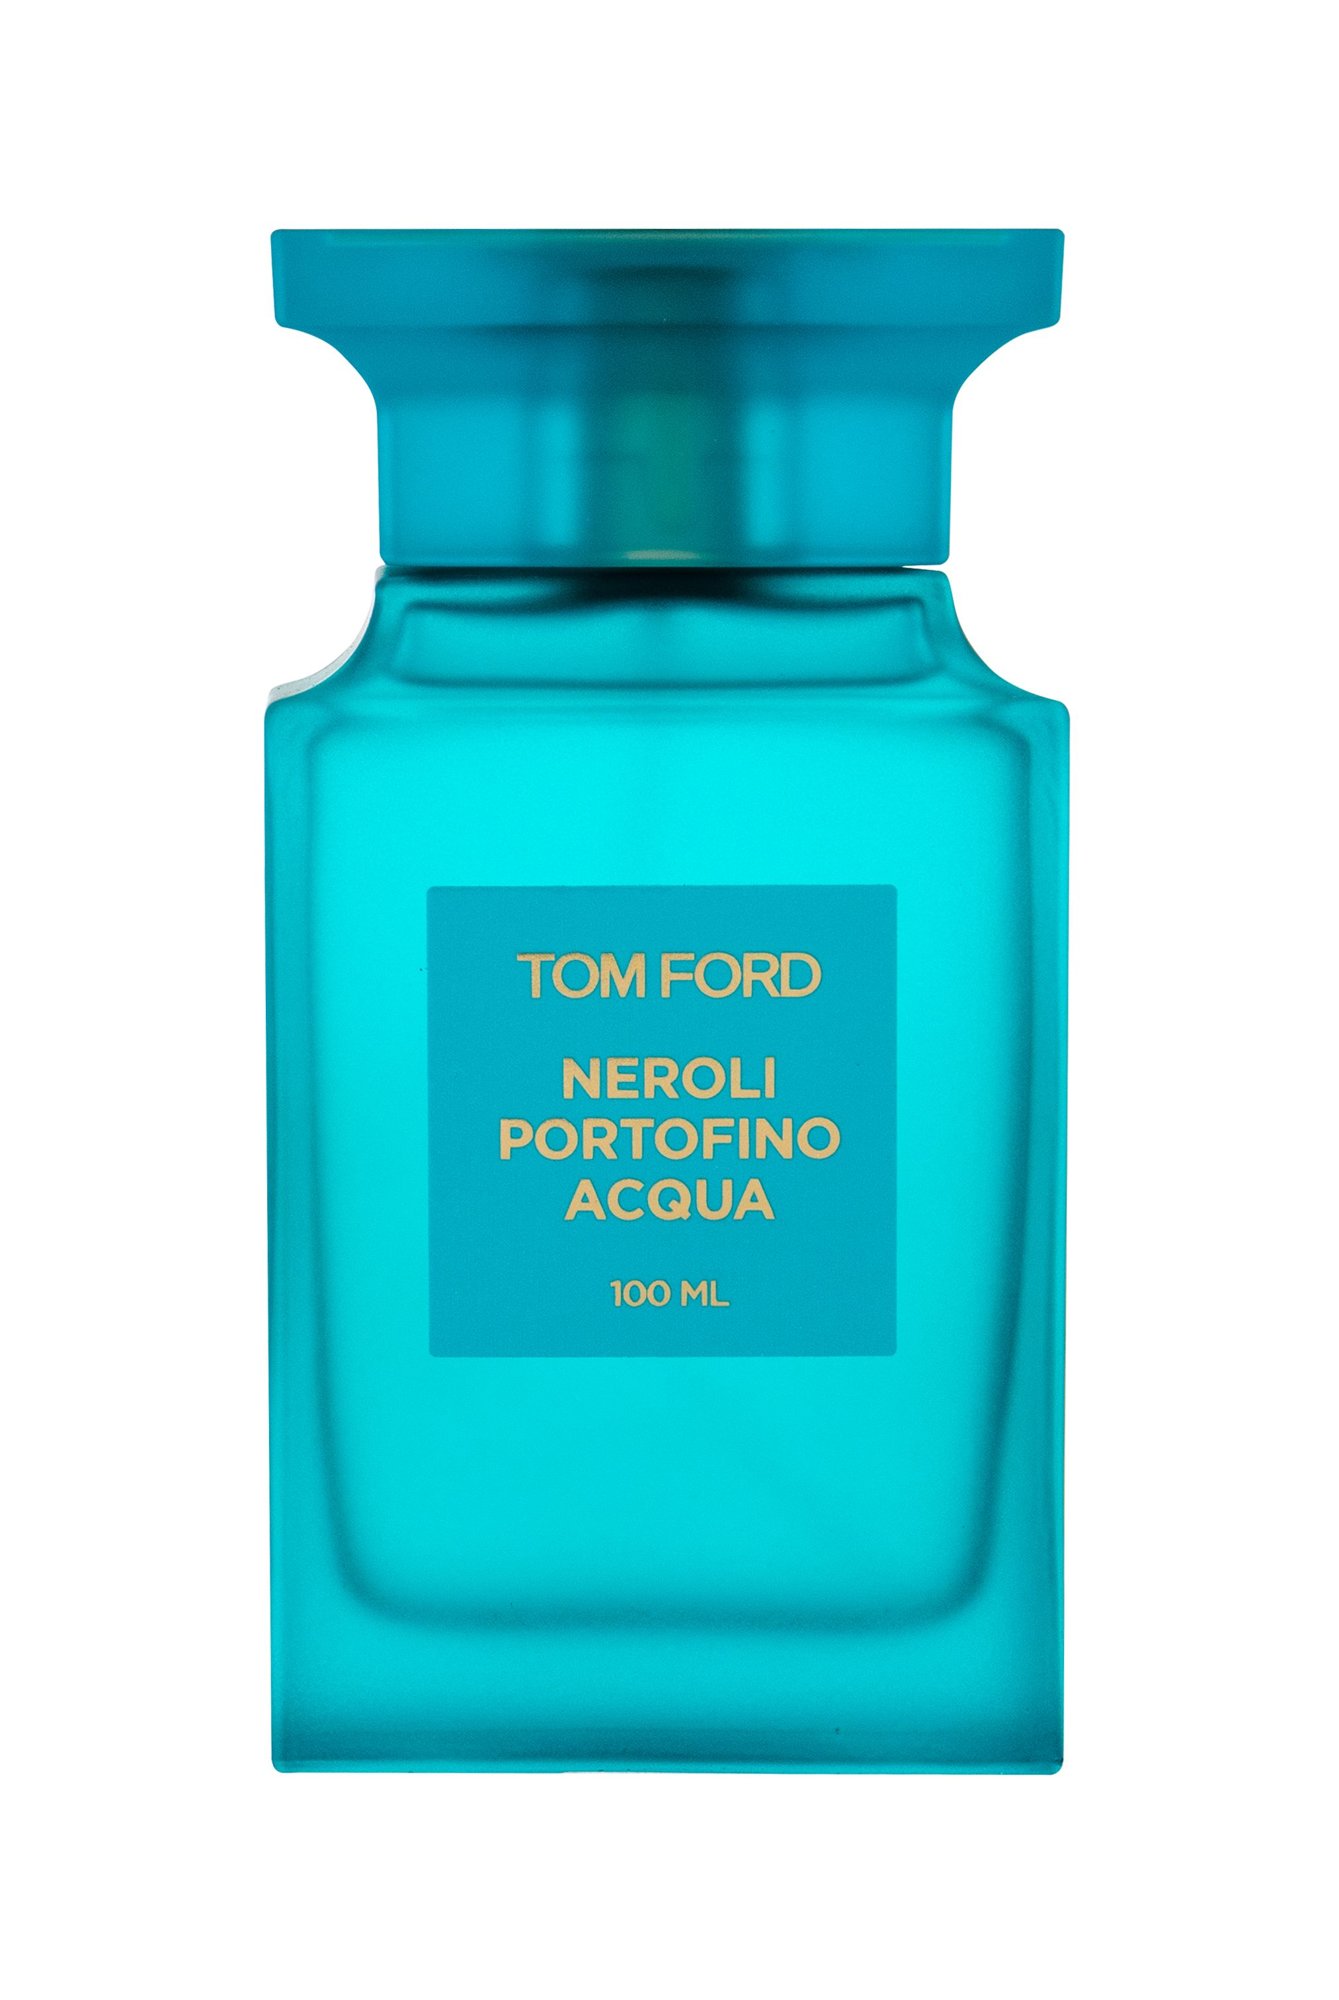 Tom Ford Neroli Portofino Acqua 100ml NIŠINIAI Kvepalai Unisex EDT